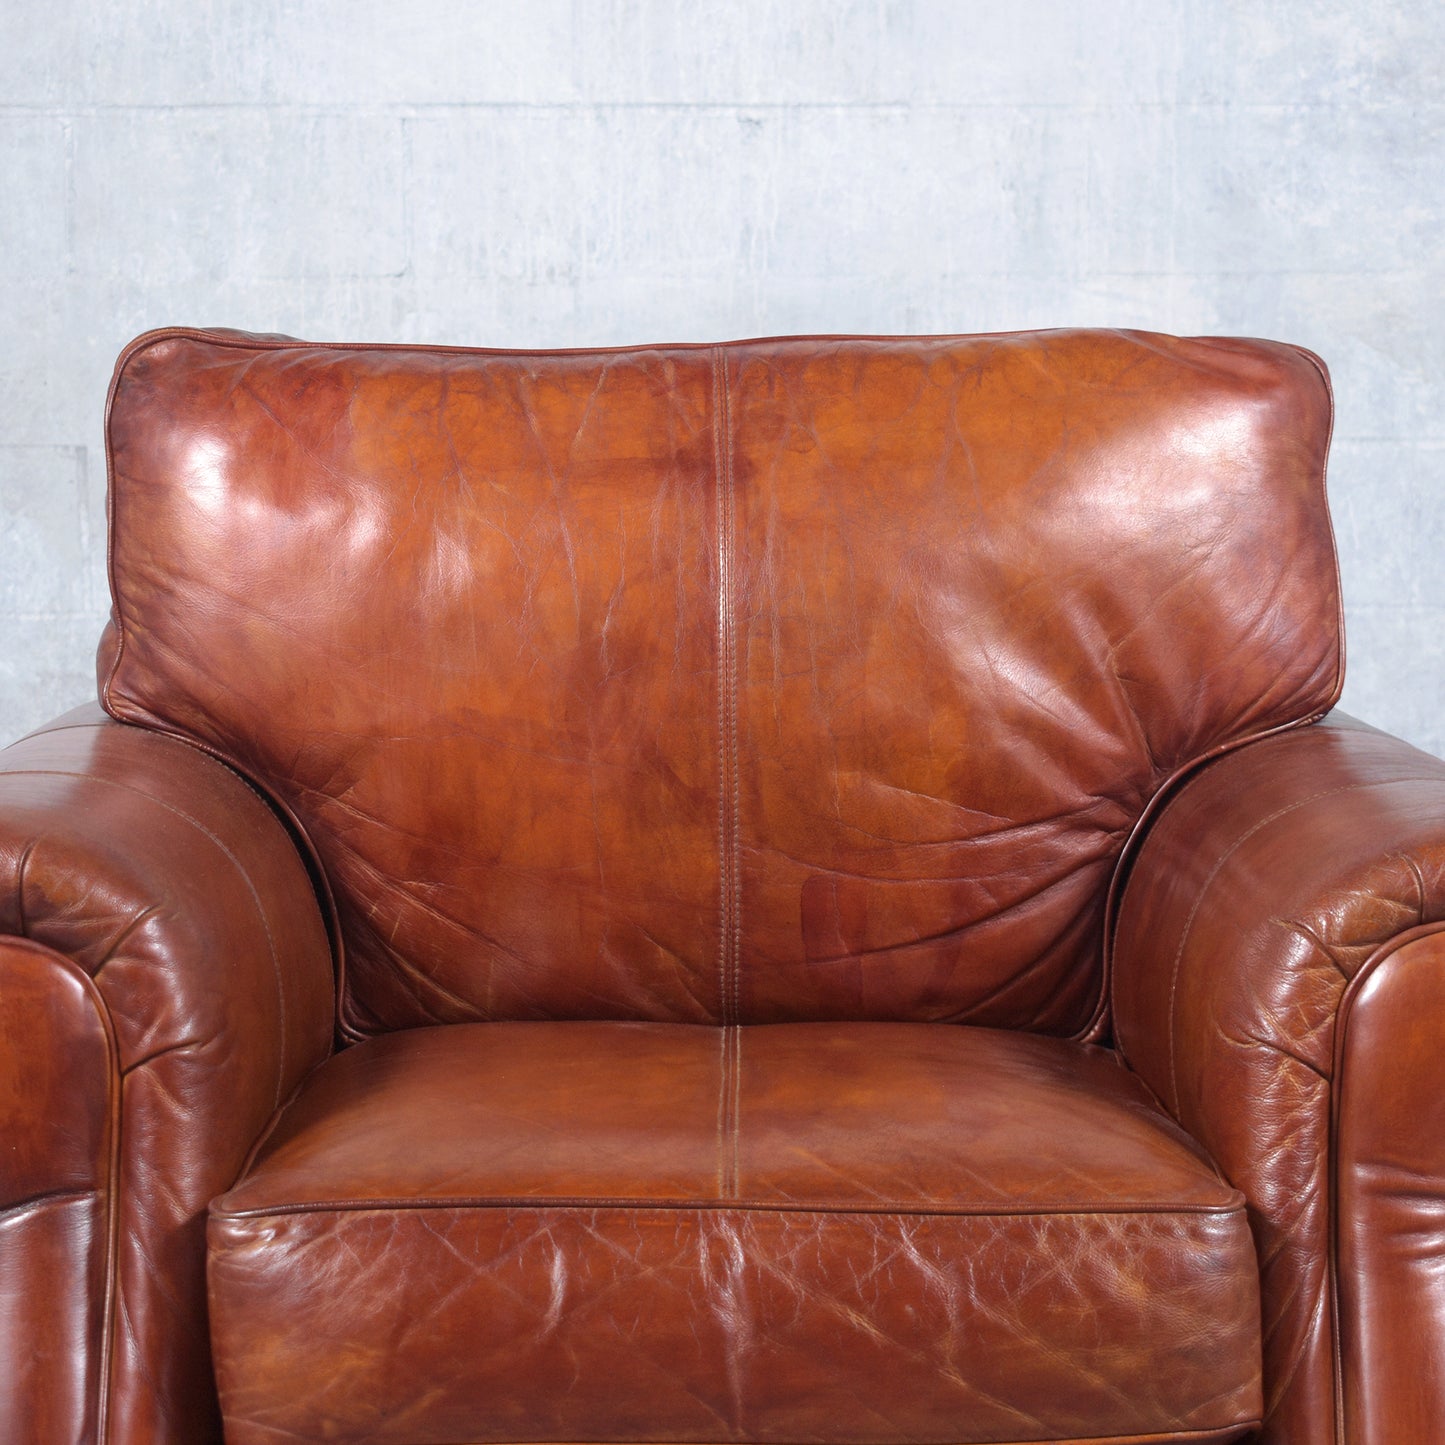 Restored Vintage Leather Armchairs: Rich Cognac Brown Elegance